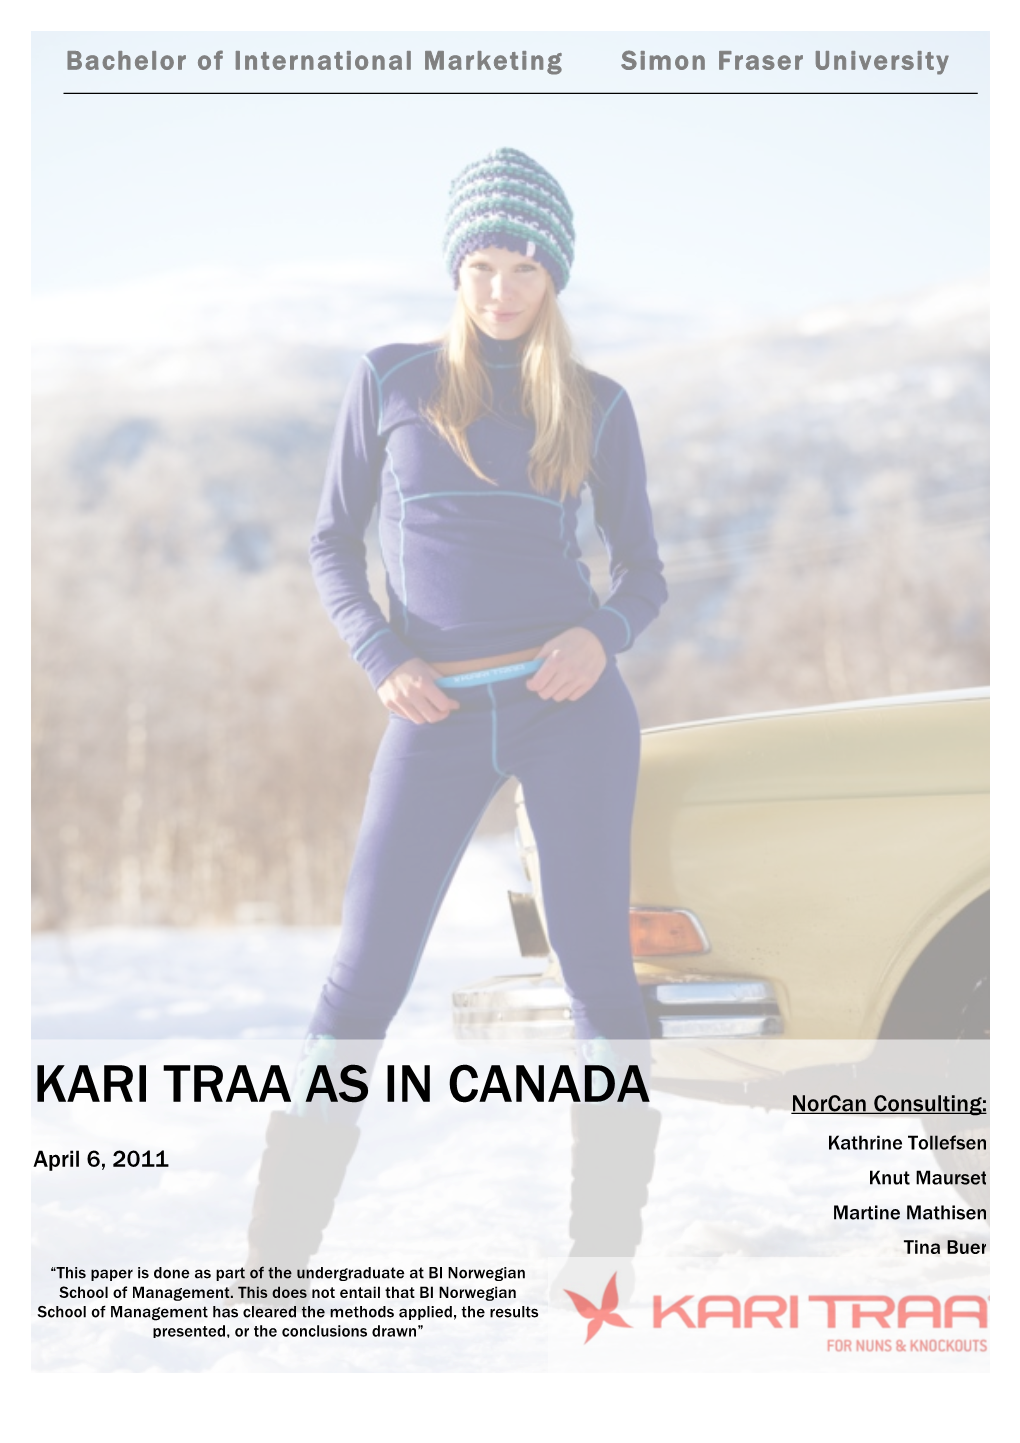 Kari Traa As in Canada